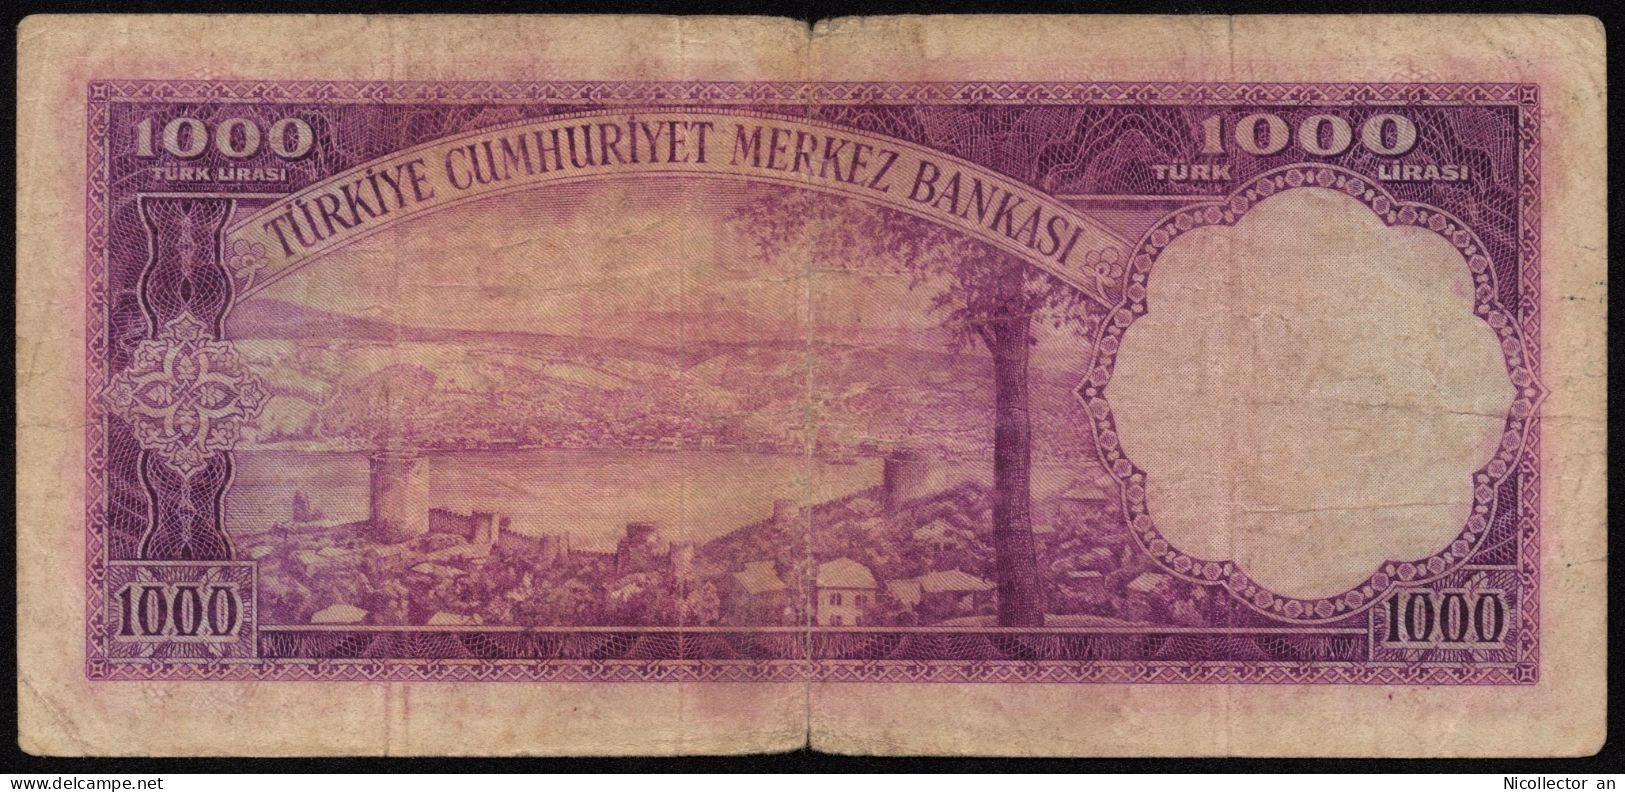 Turkey, 1.000 Lira, 1953, P-172, FINE Rare Banknote - Turquia